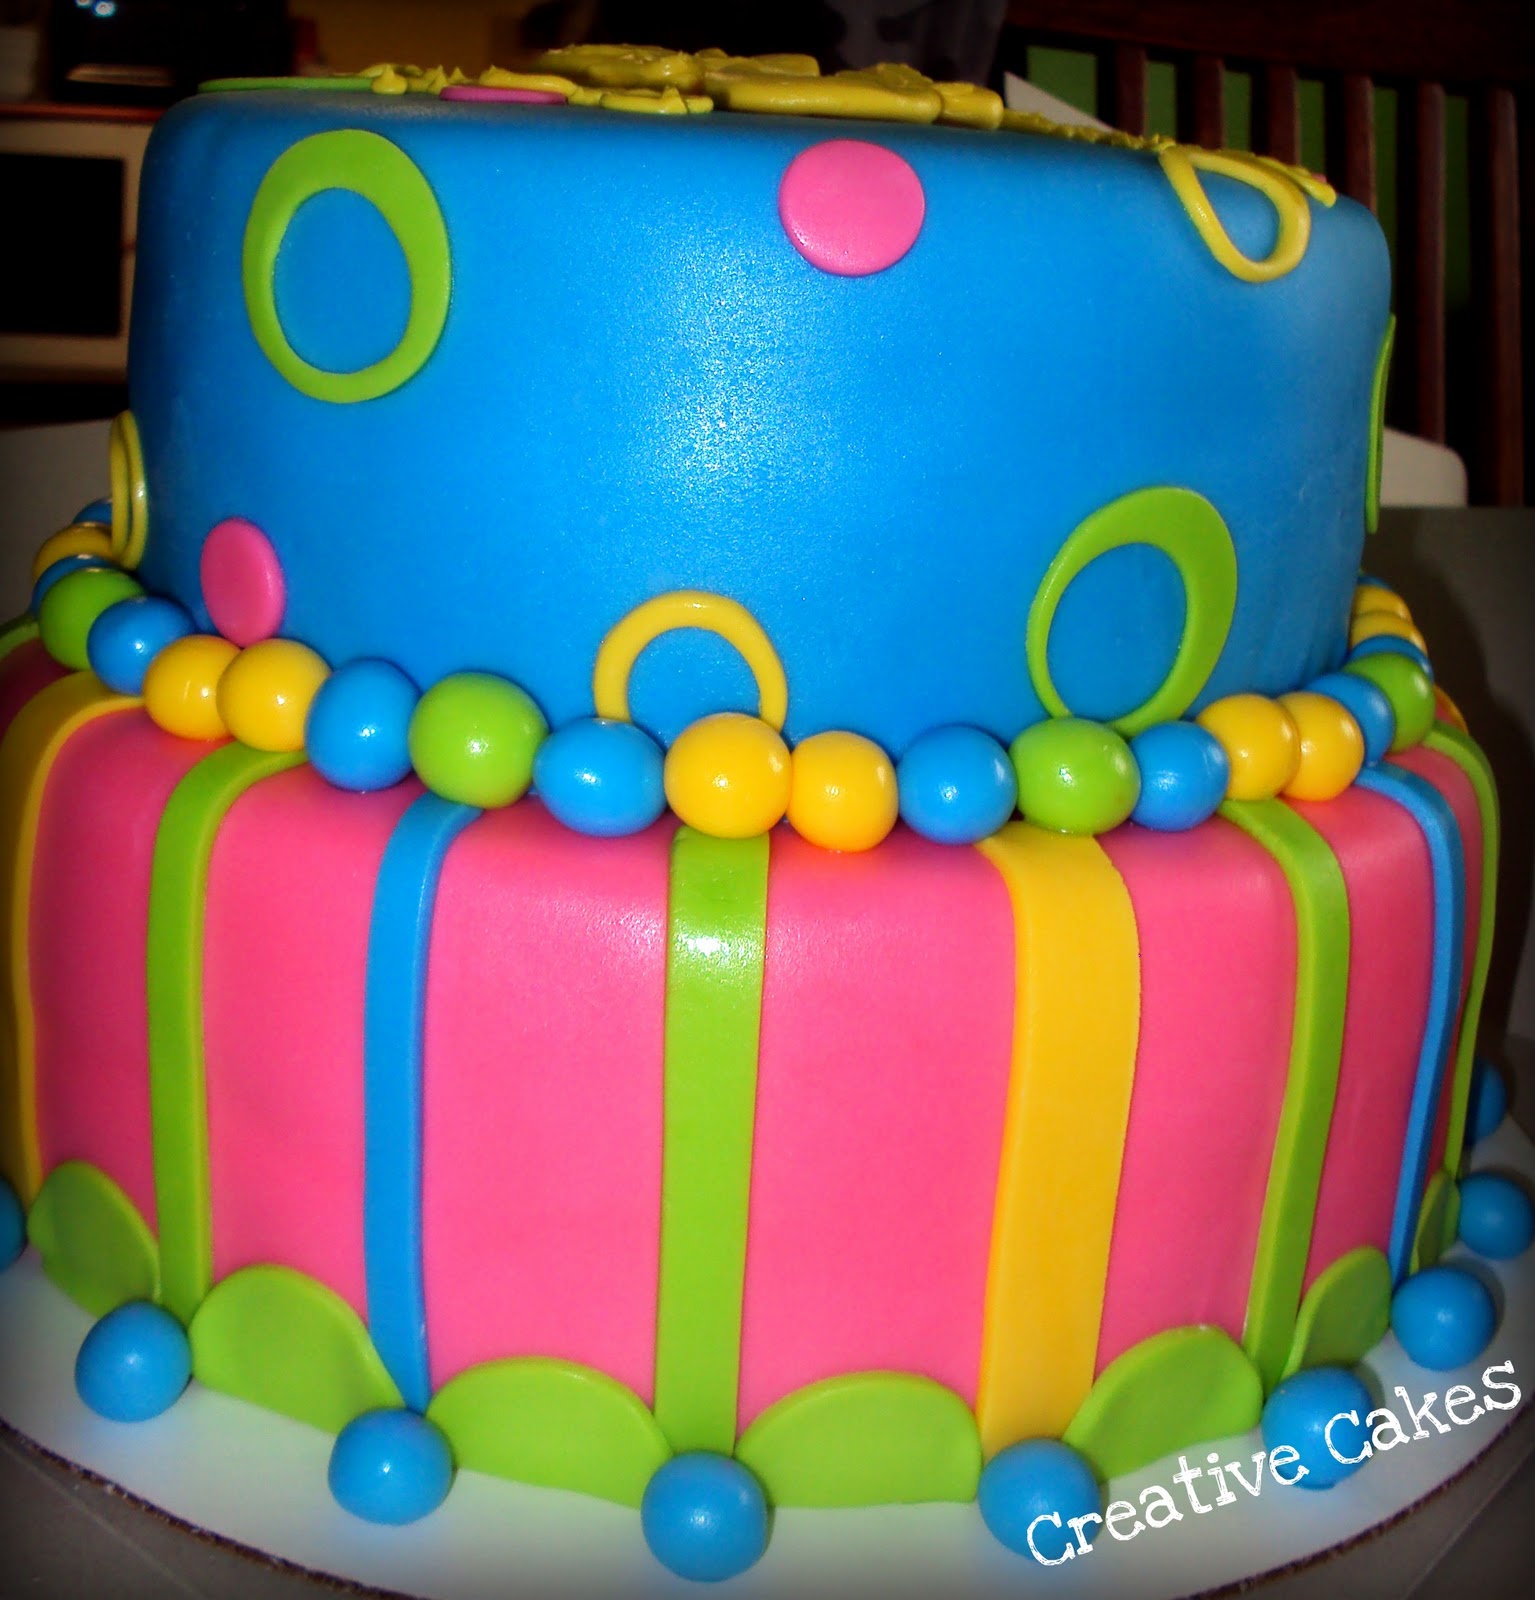 Creative cakes: November 2011